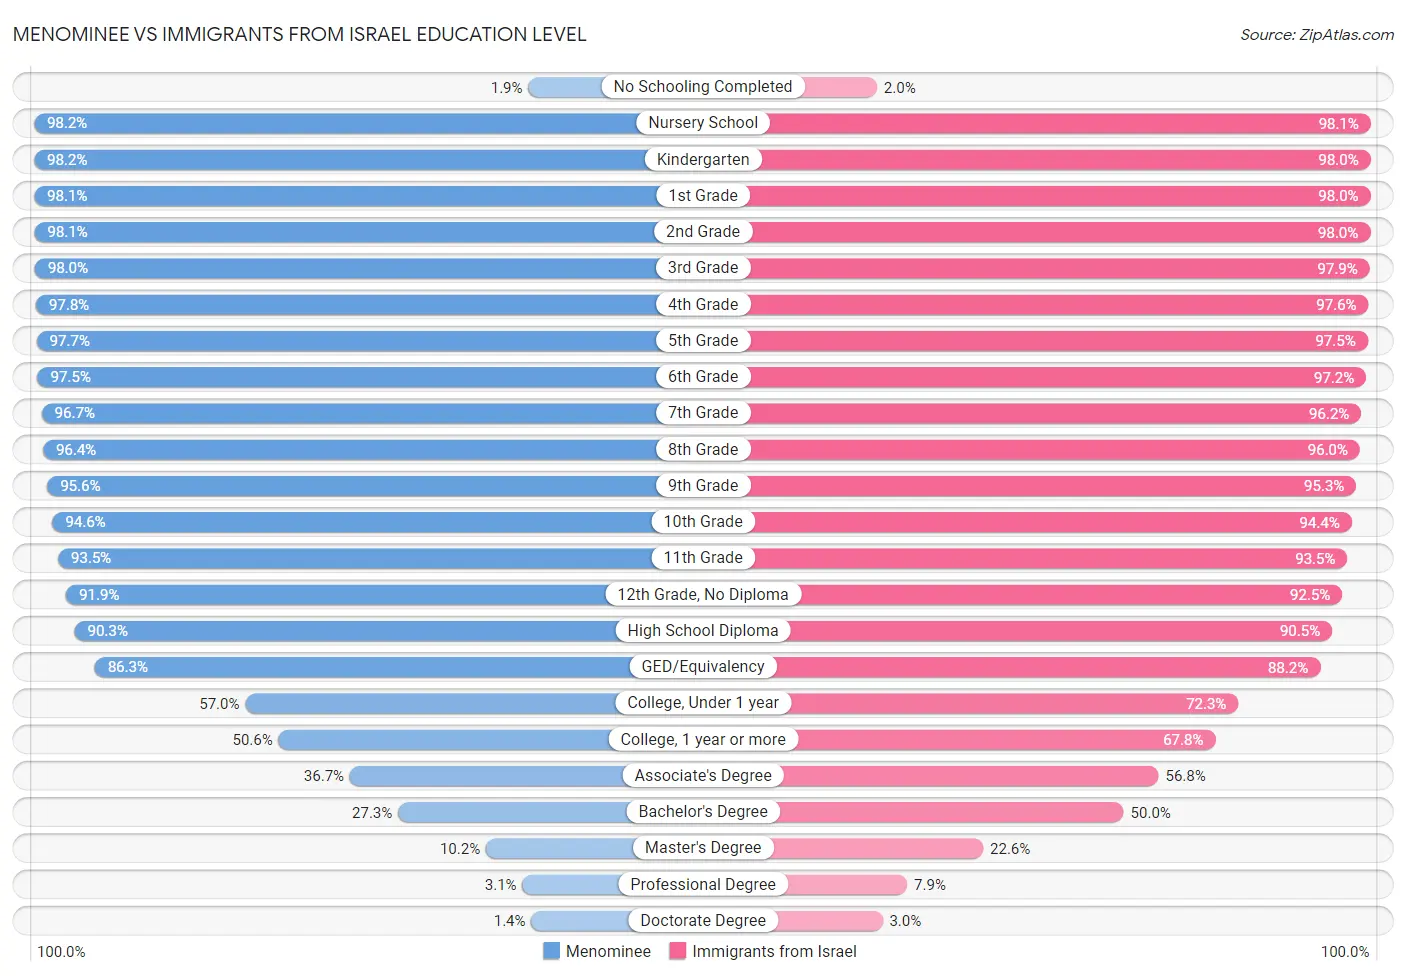 Menominee vs Immigrants from Israel Education Level